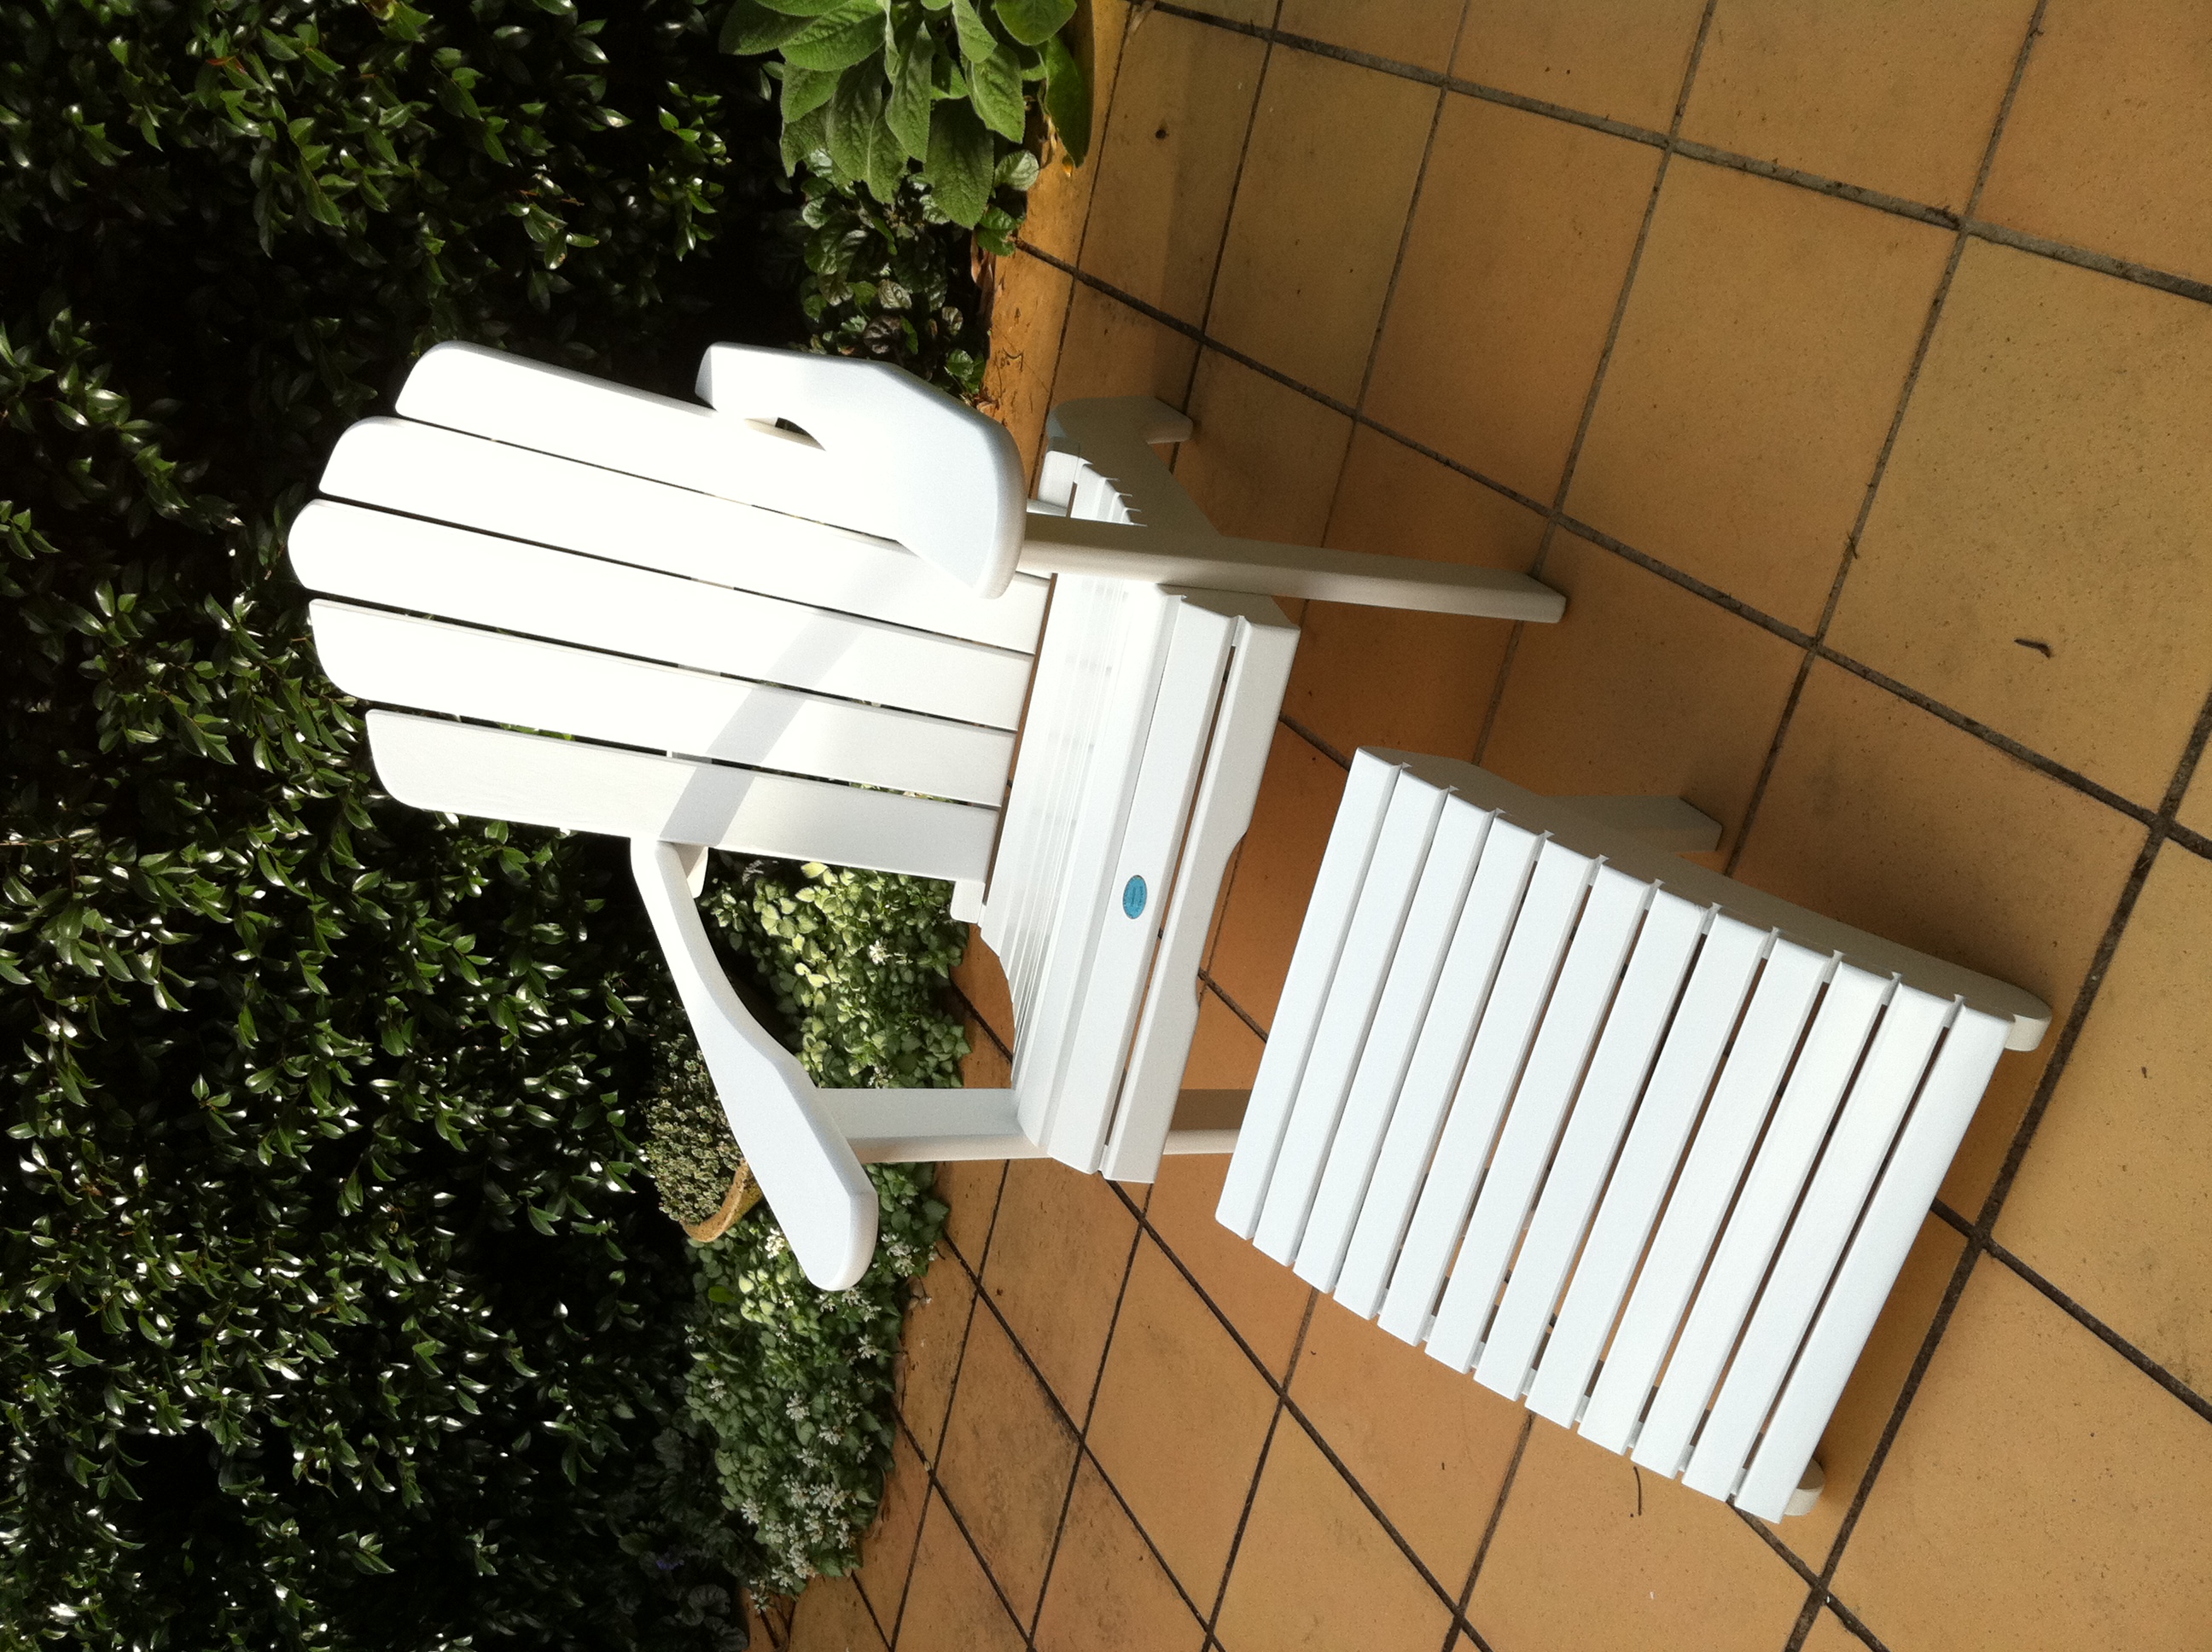 The adirondack 'Balcony' chair from "Adirondack Chair Australia"